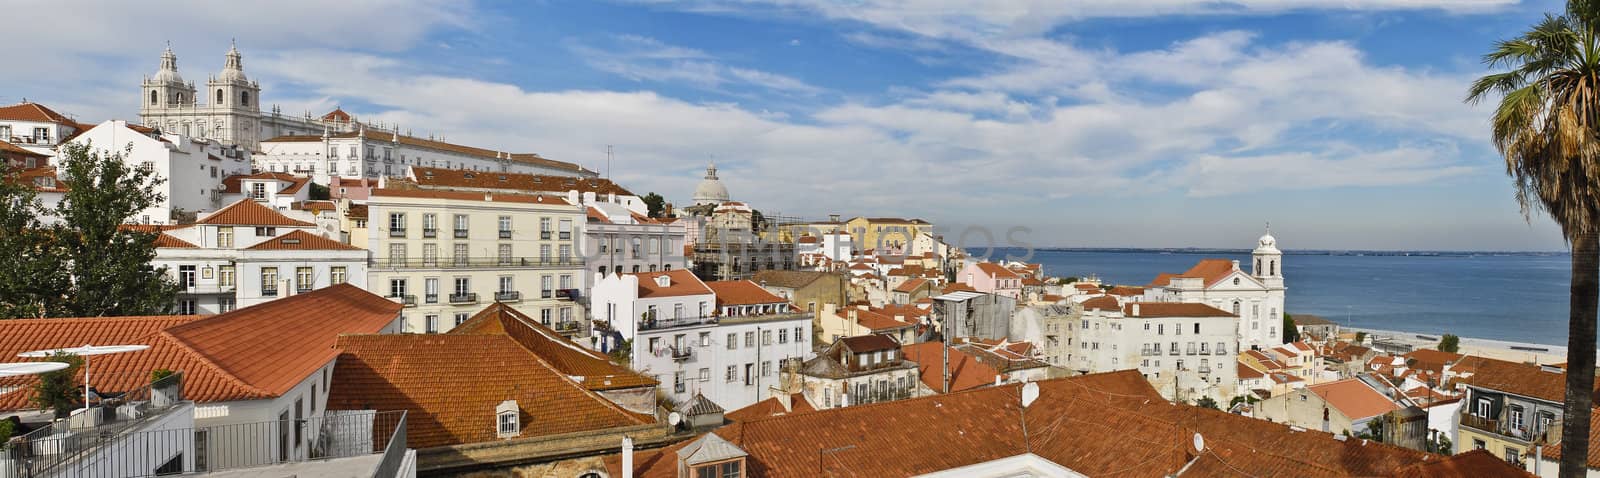 Lisbon. by angelsimon